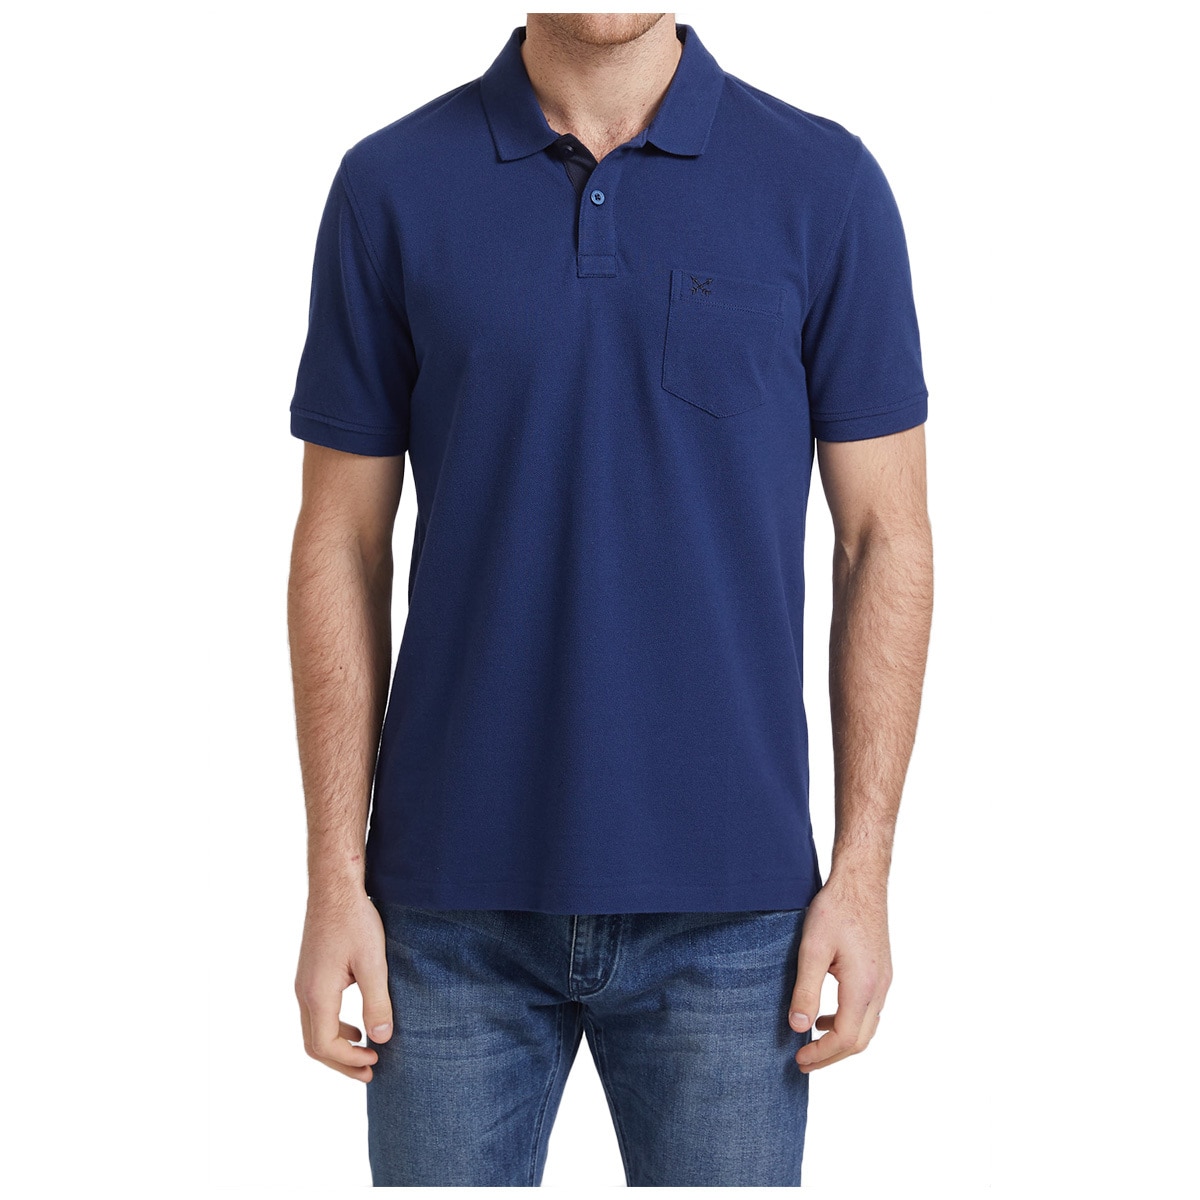 Sportscraft Men's Cotton Polo Shirt Indigo | Costco Austr...